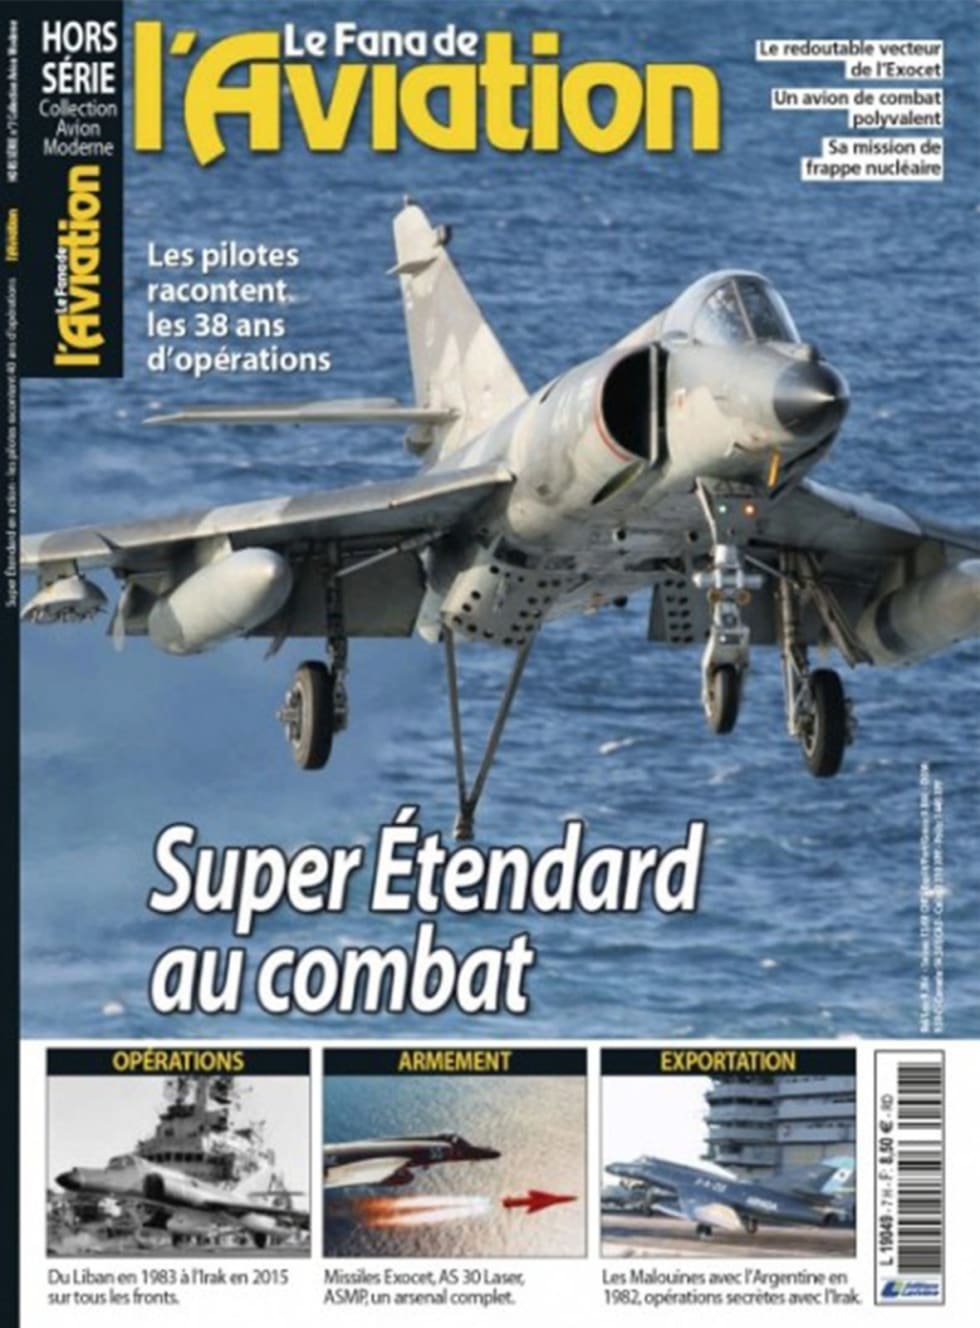 Le Fana de l’Aviation – Special Edition no. 7